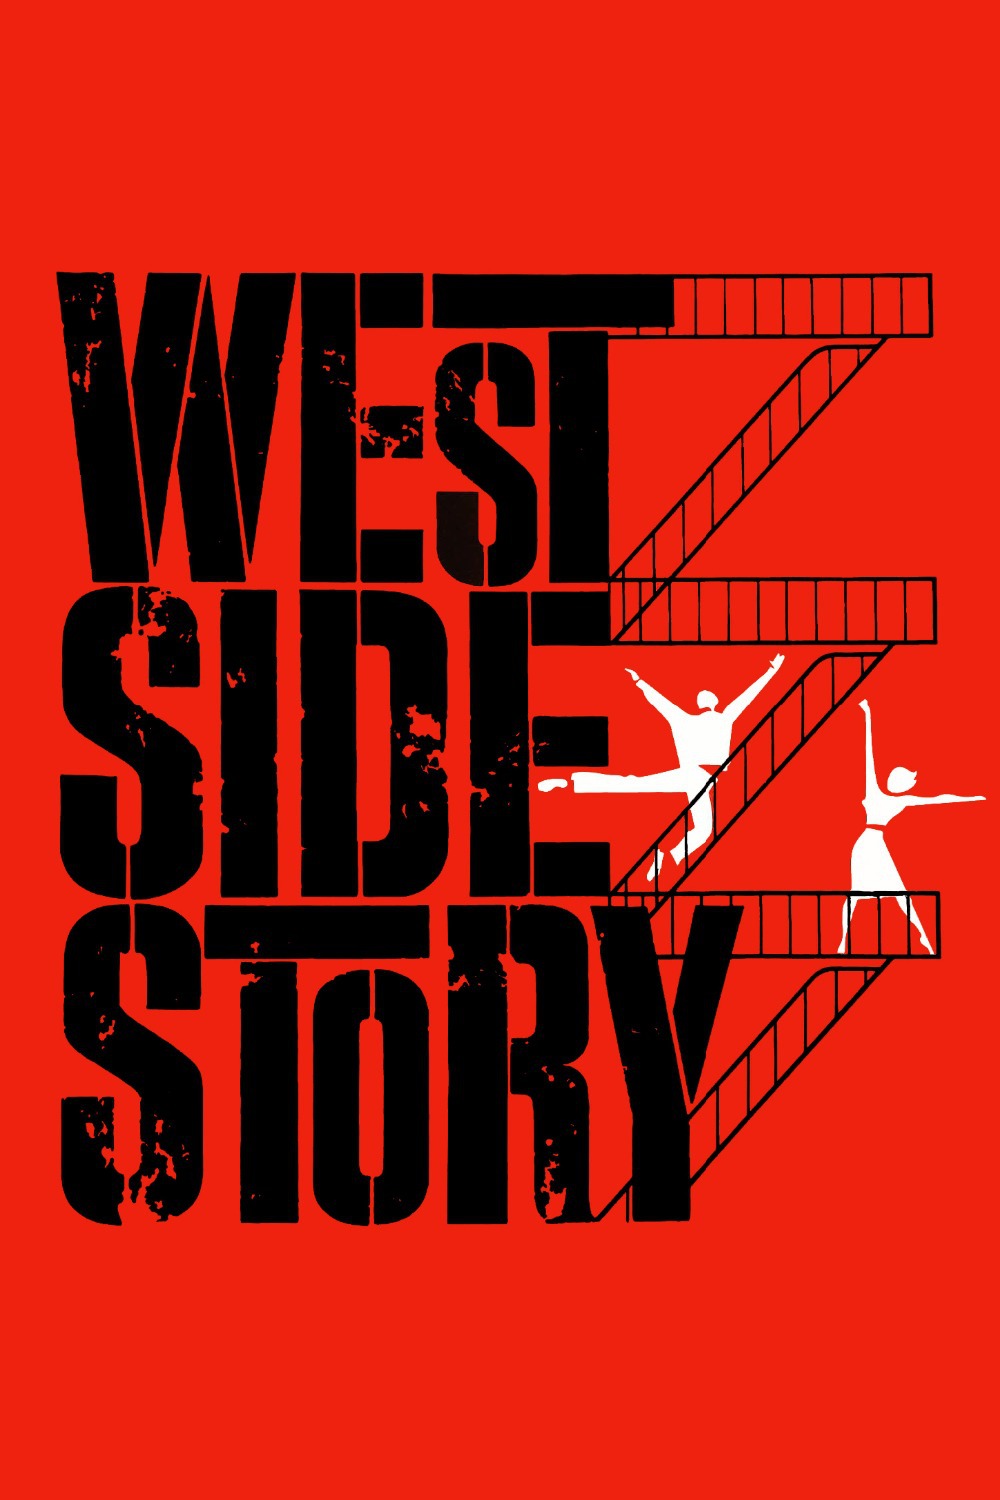 OEM-West-Side-Story-font-b-Broadway-b-font-Theater-Play-art-logo-home-office-wall.jpg